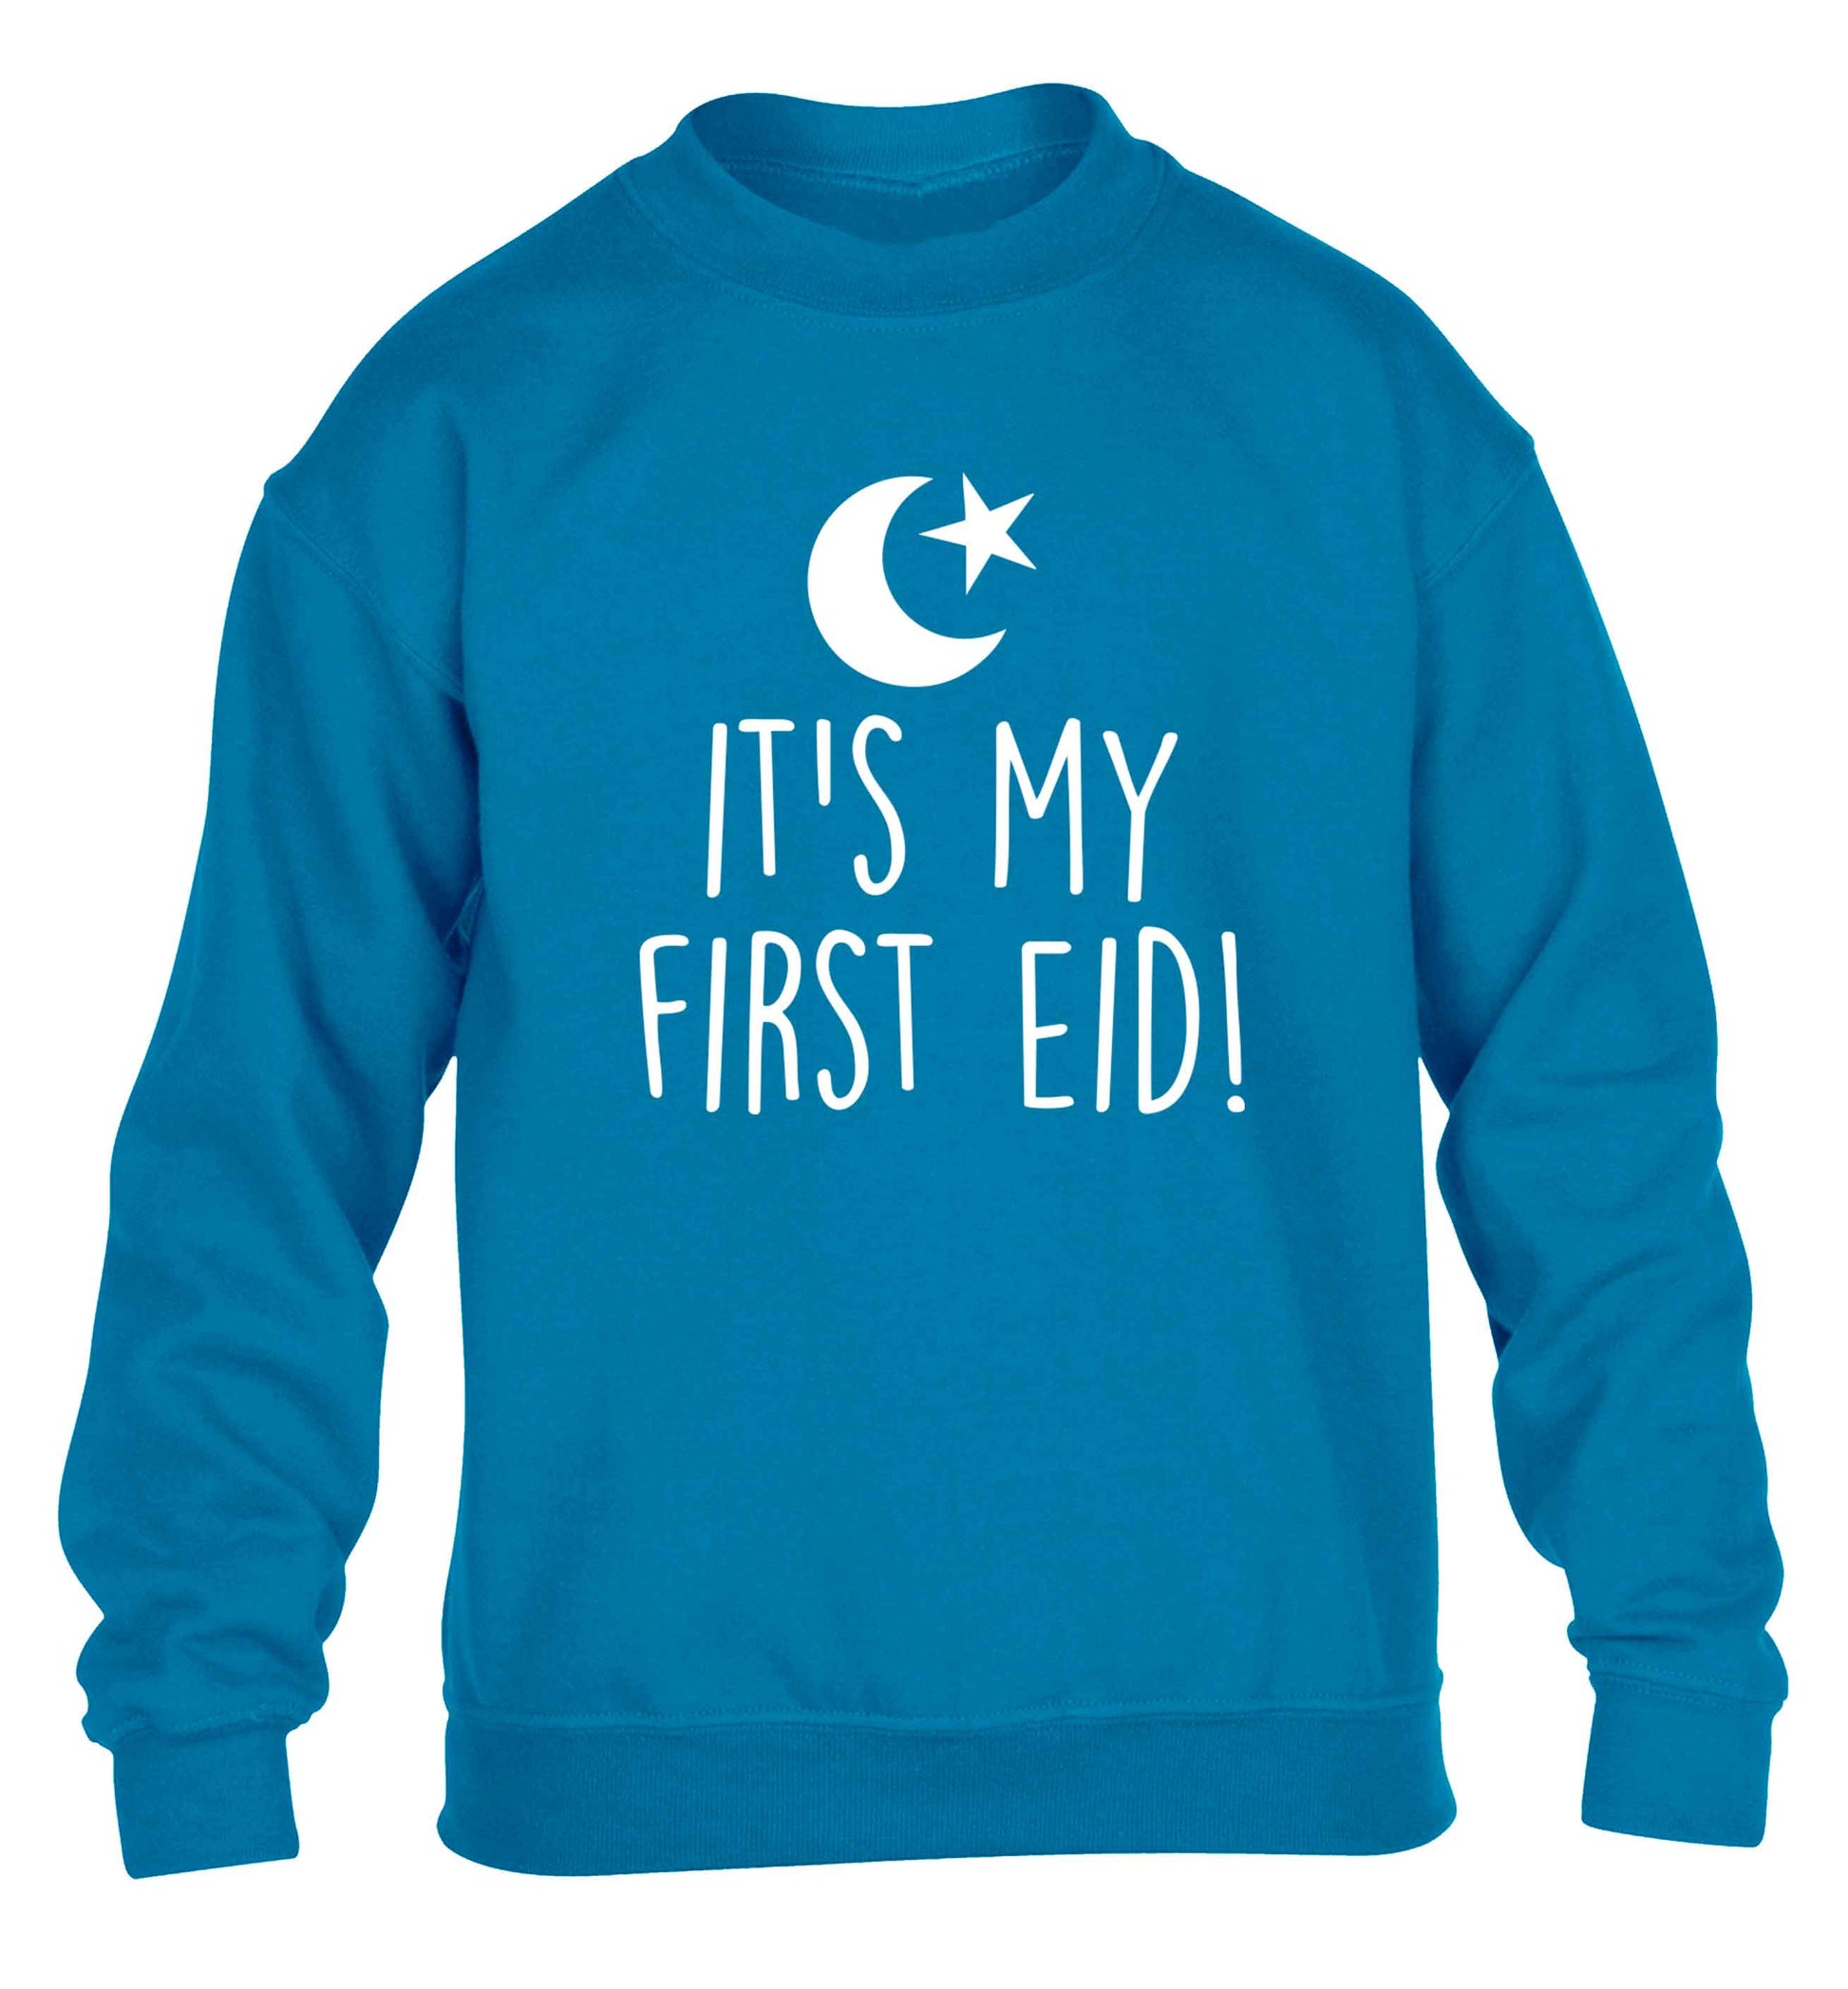 It's my first Eid children's blue sweater 12-13 Years